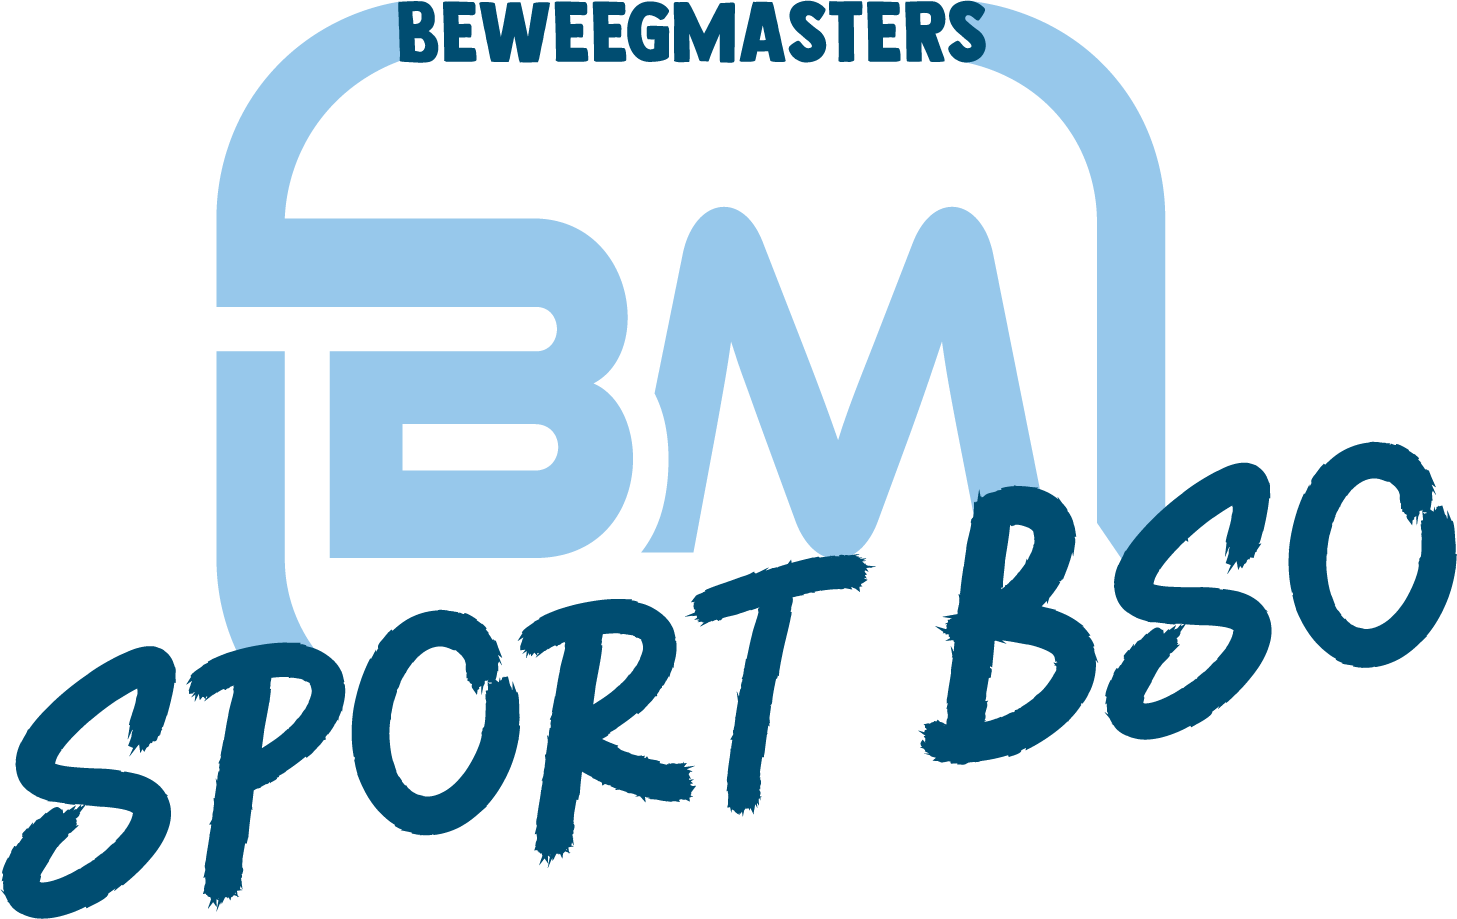 Beweegmasters sport BSO - logo